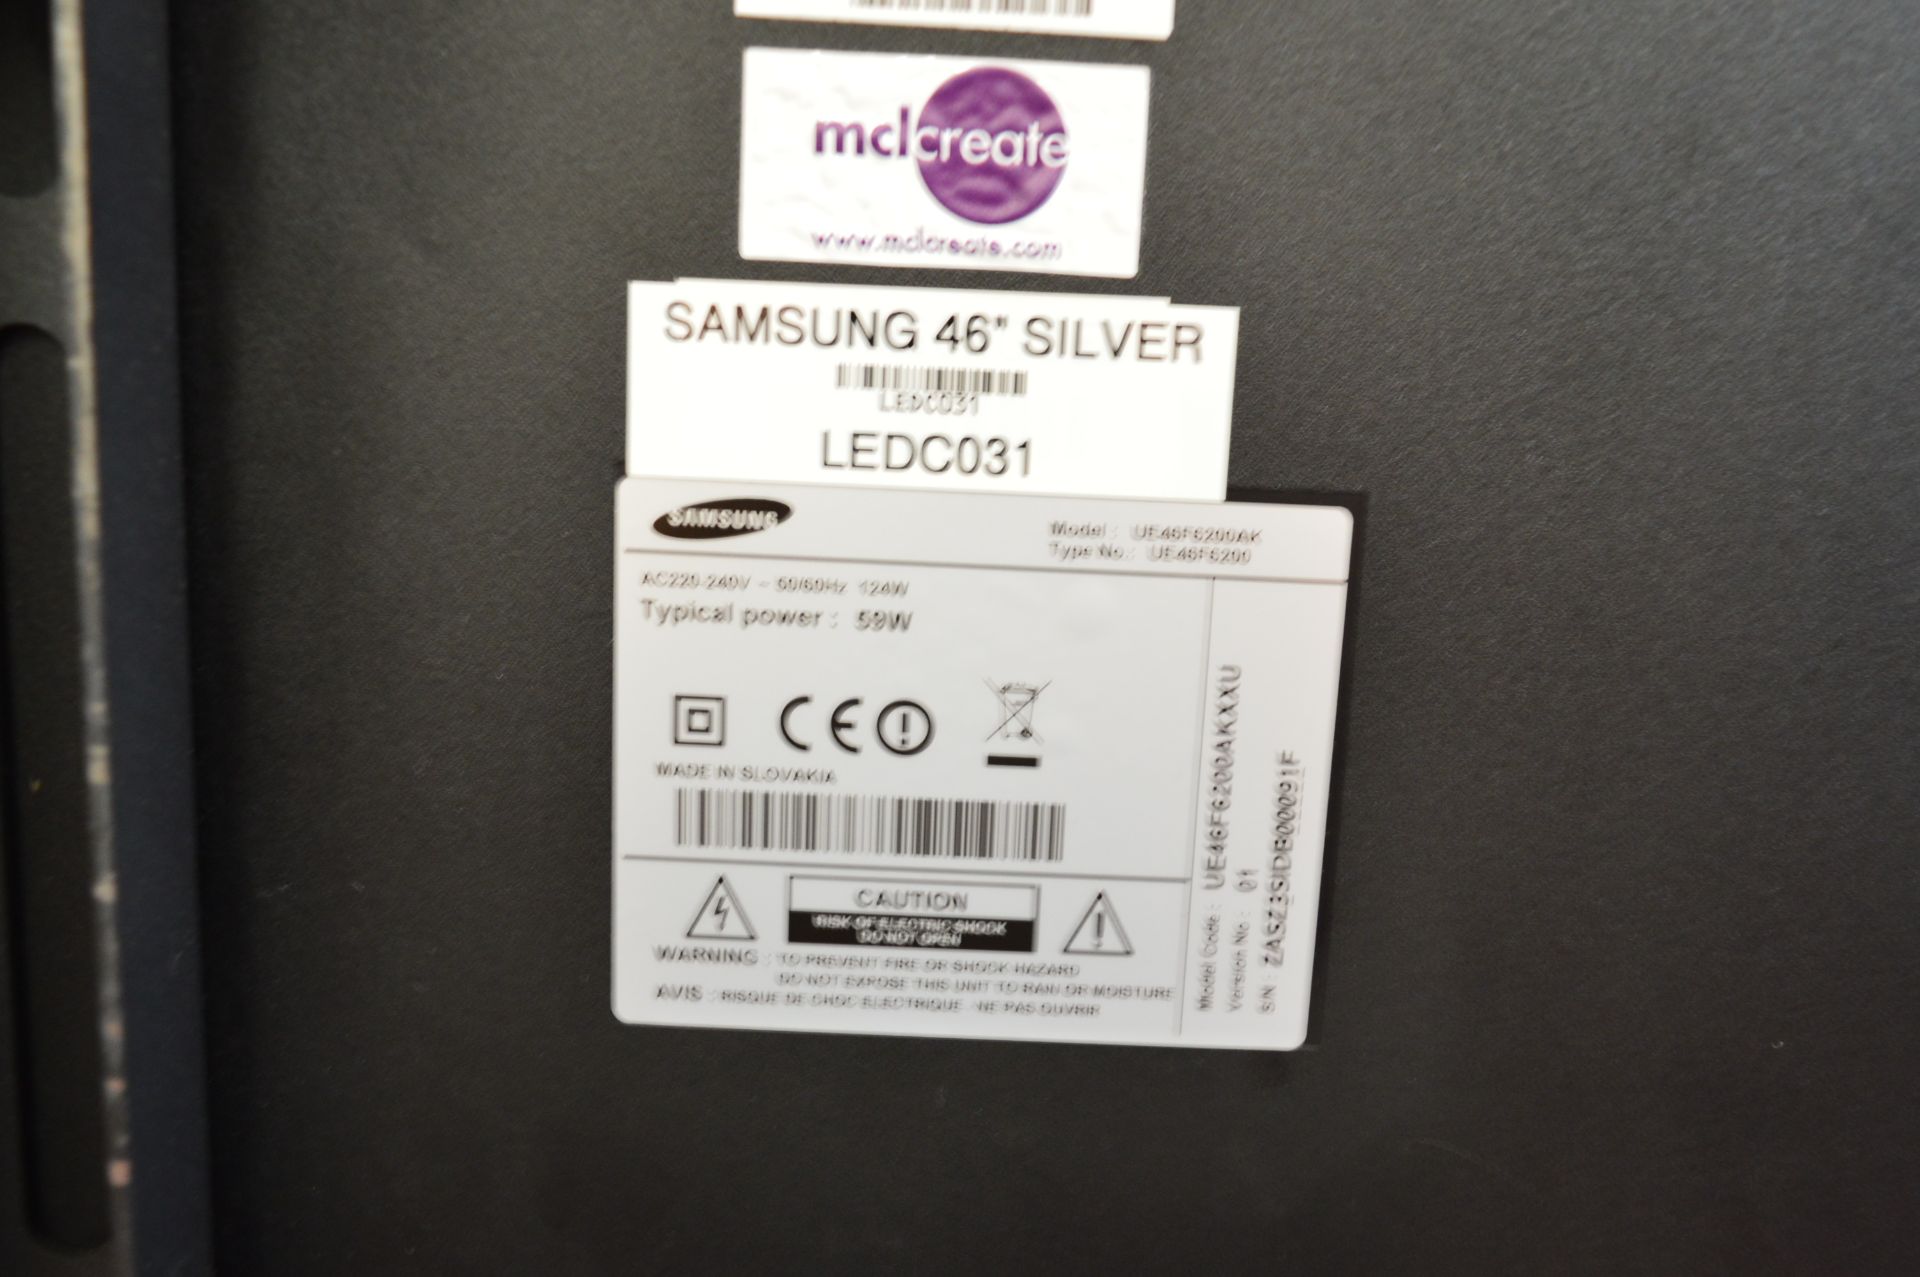 Samsung, 46" full HD LED Smart 3D TV, Silver, Mode - Image 2 of 4